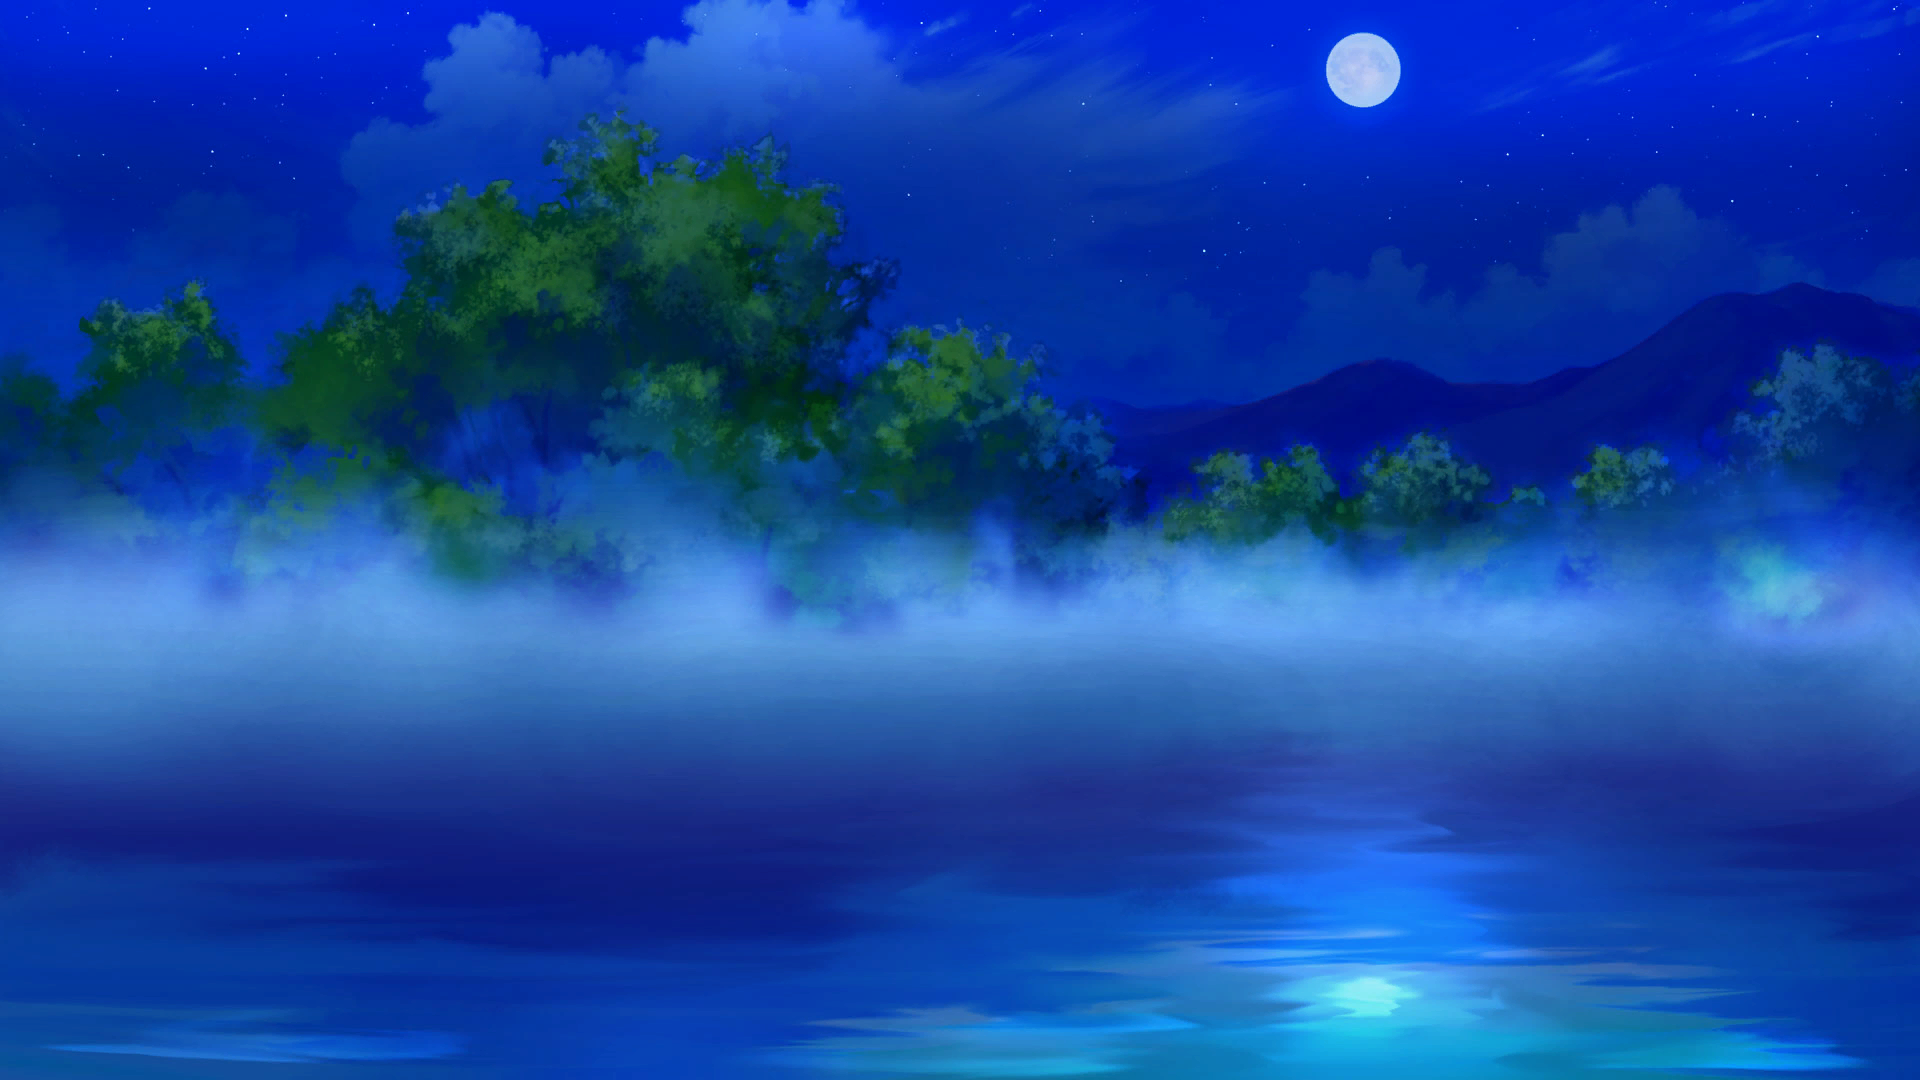 Touhou Spell Bubble - Misty Lake (Night)